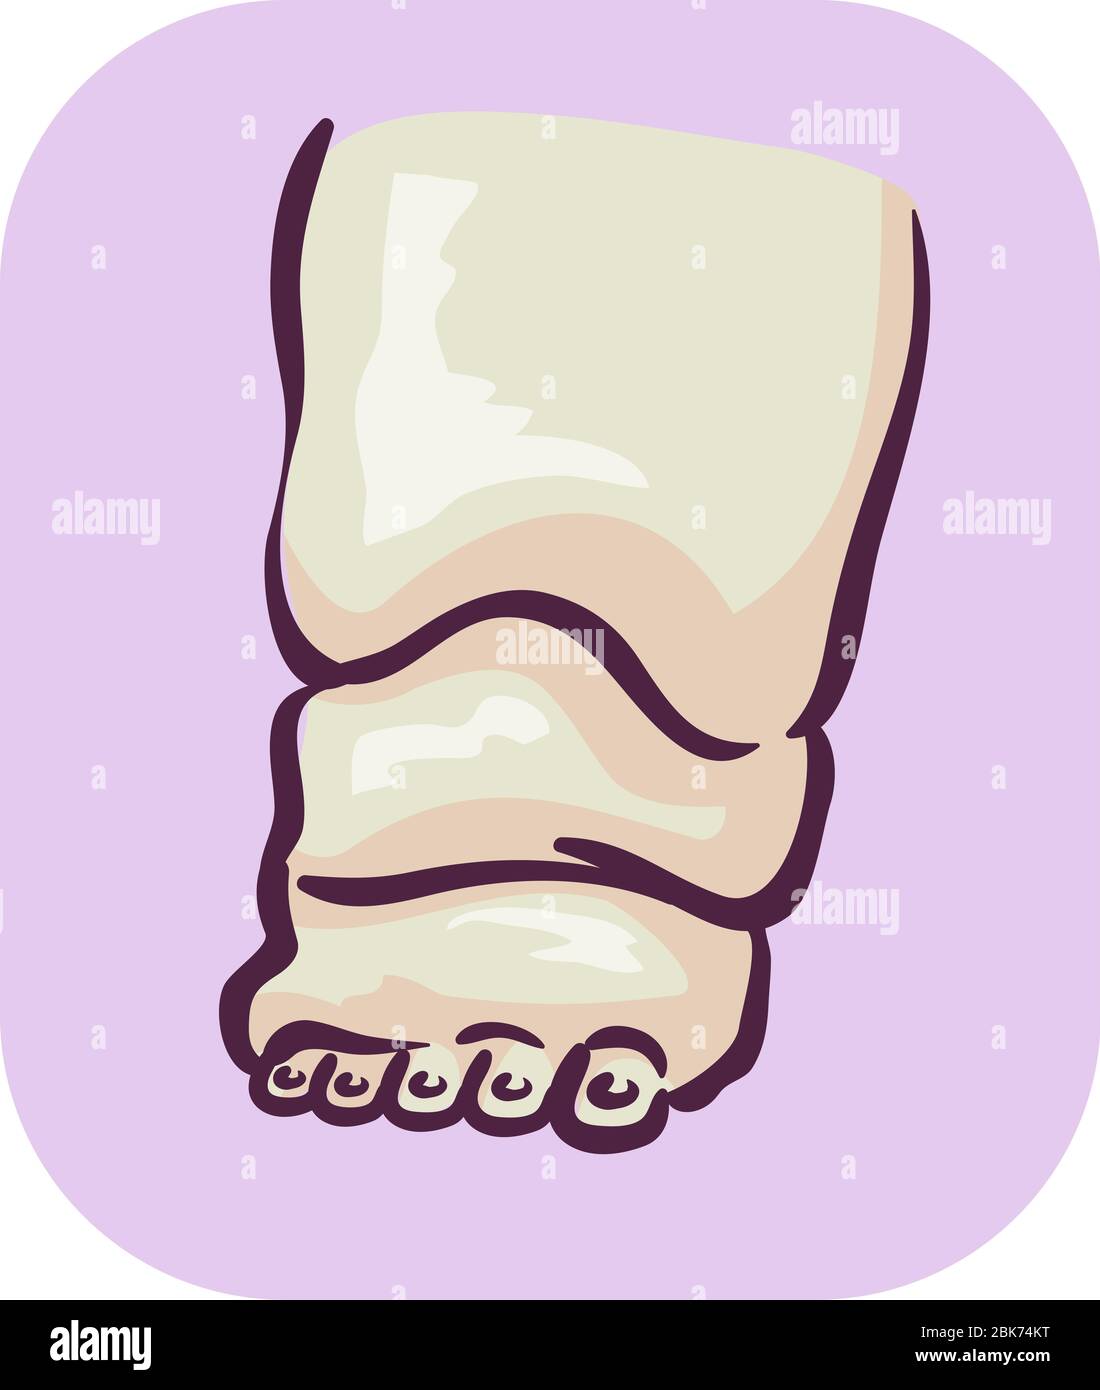 Illustration of Swollen Foot Symptom of Edema Stock Photo